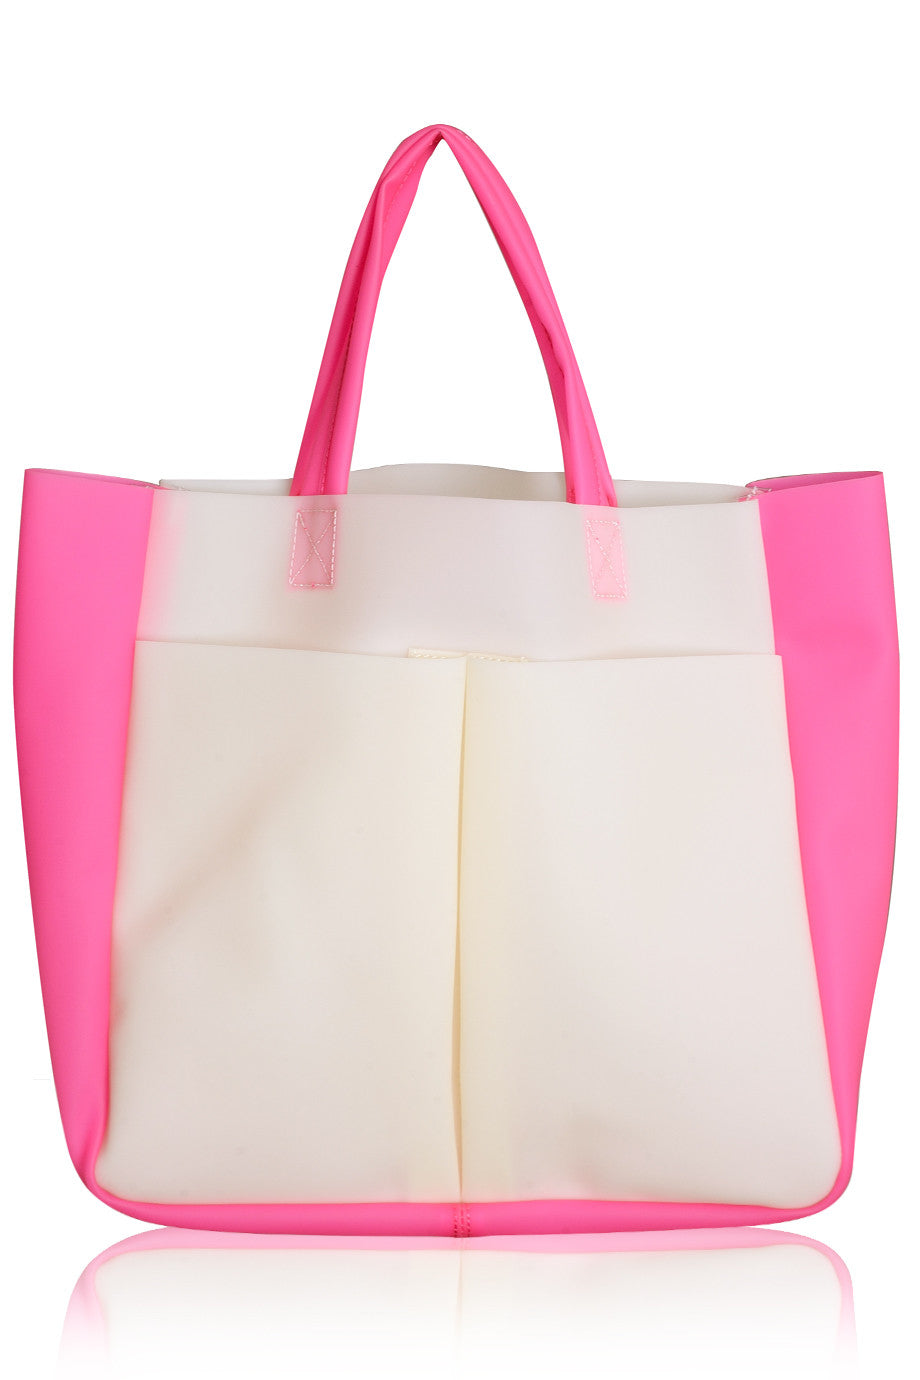 RIKKI Neon Pink Phosphorescent Bag